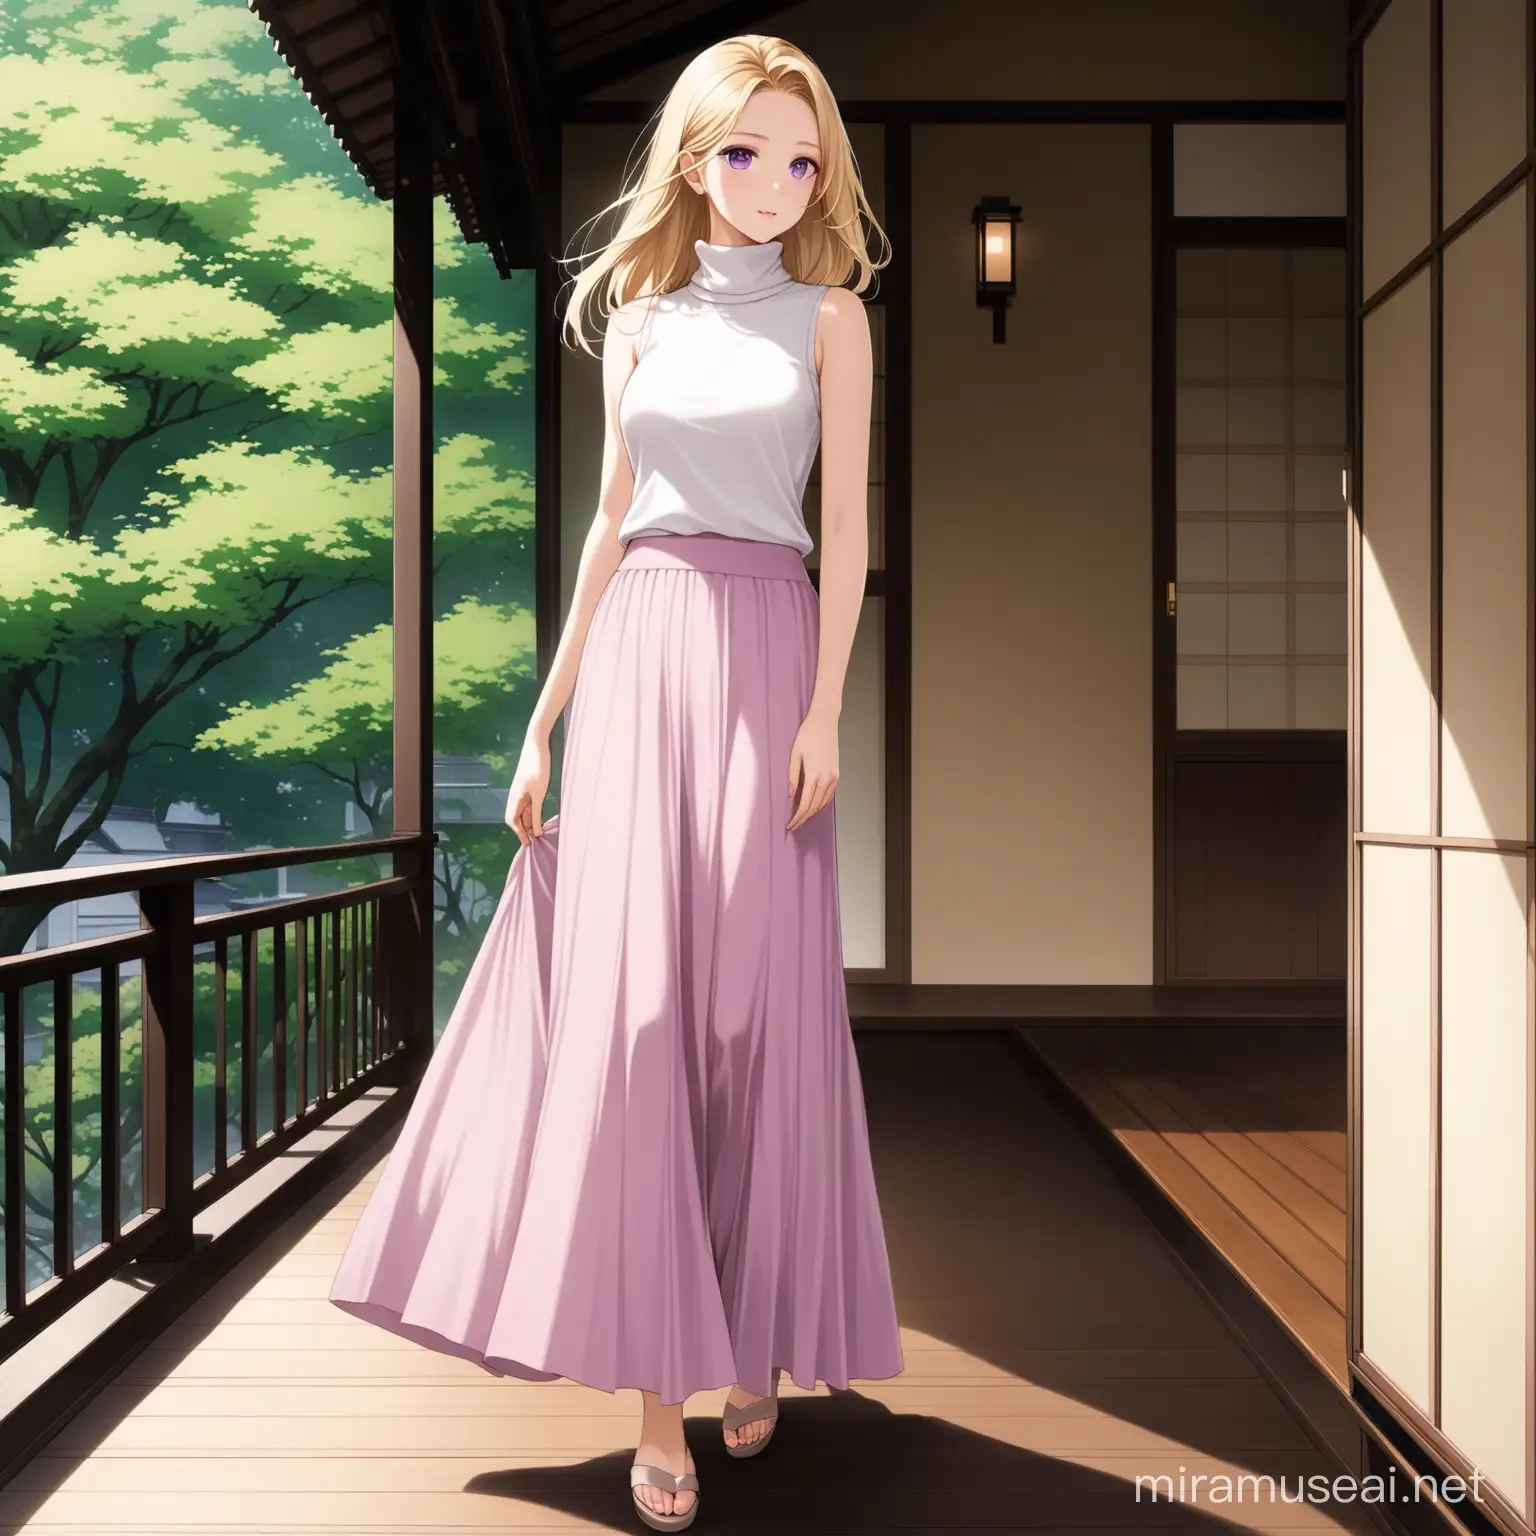 Elegant Blonde Woman in Luxurious Tokyo Villa